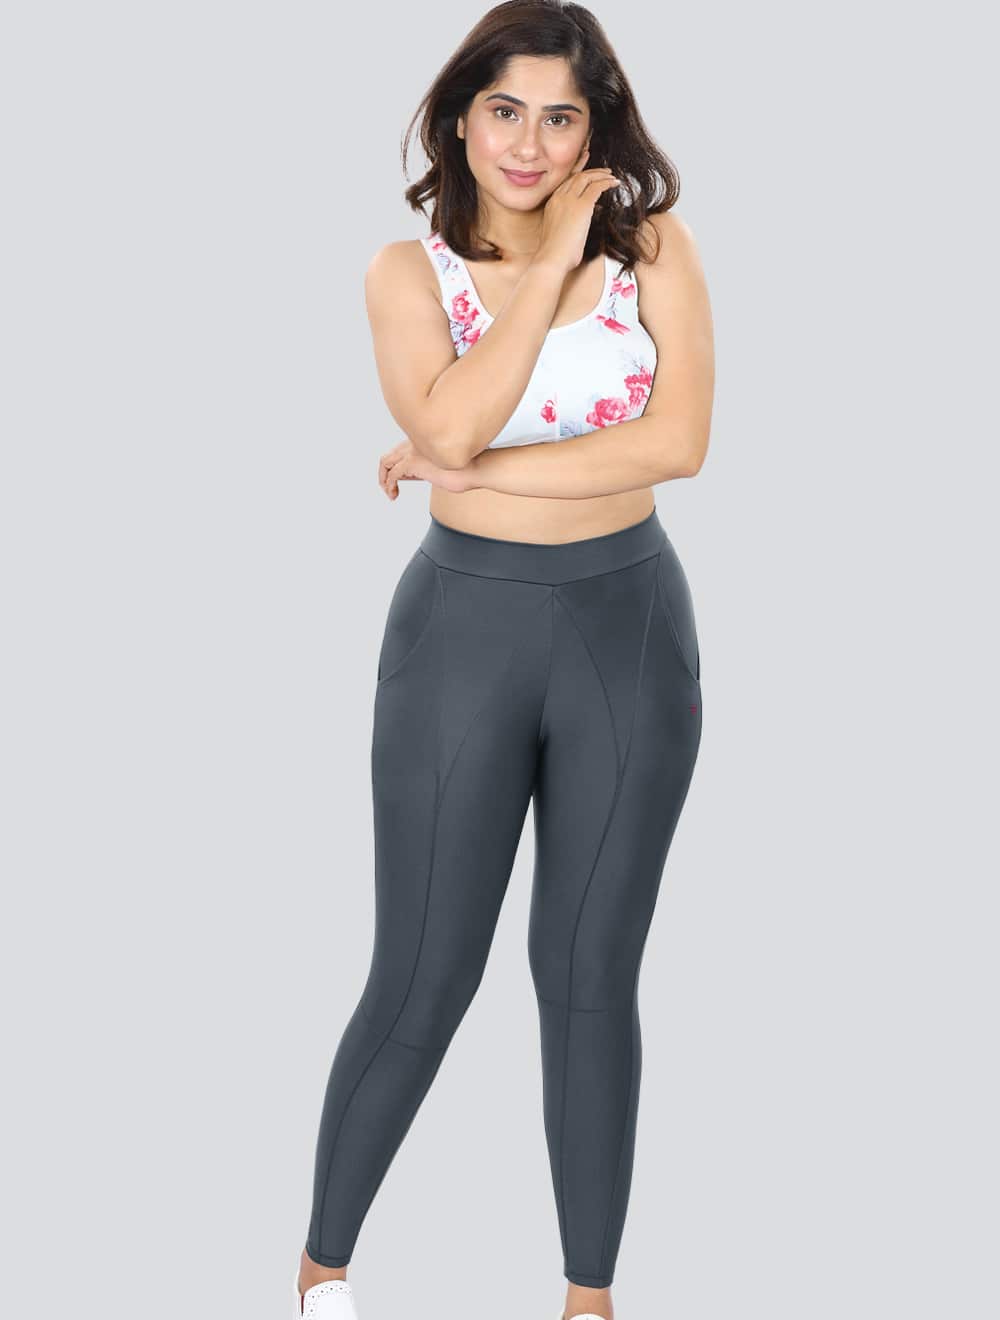 Dermawear Women's Active Gym Workout Pants